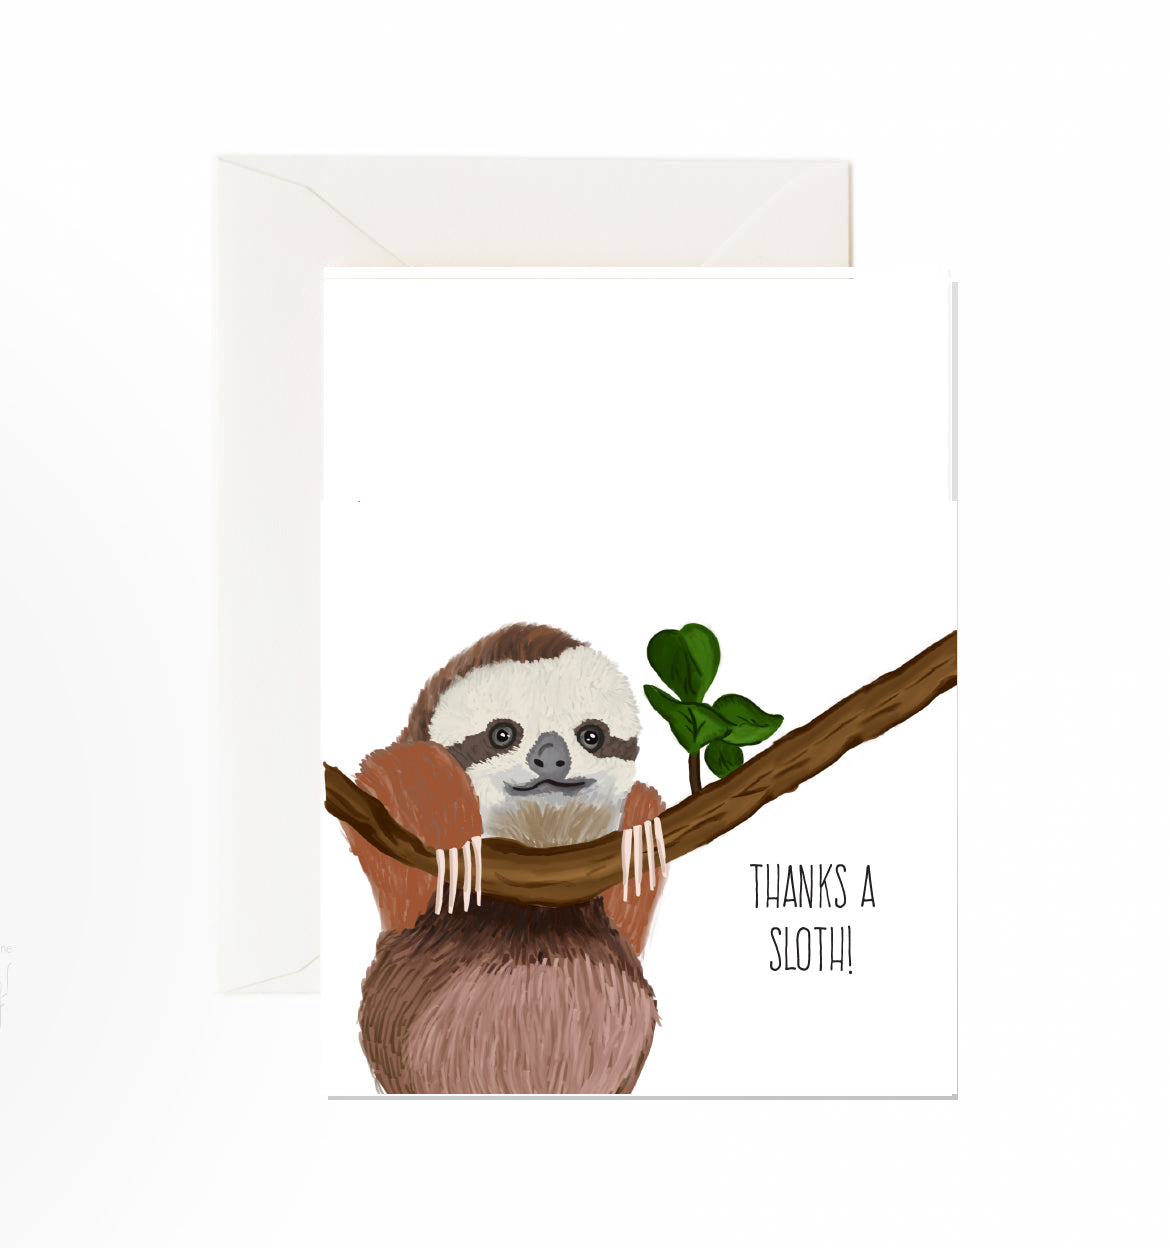 Thanks A Sloth! - Greeting Card